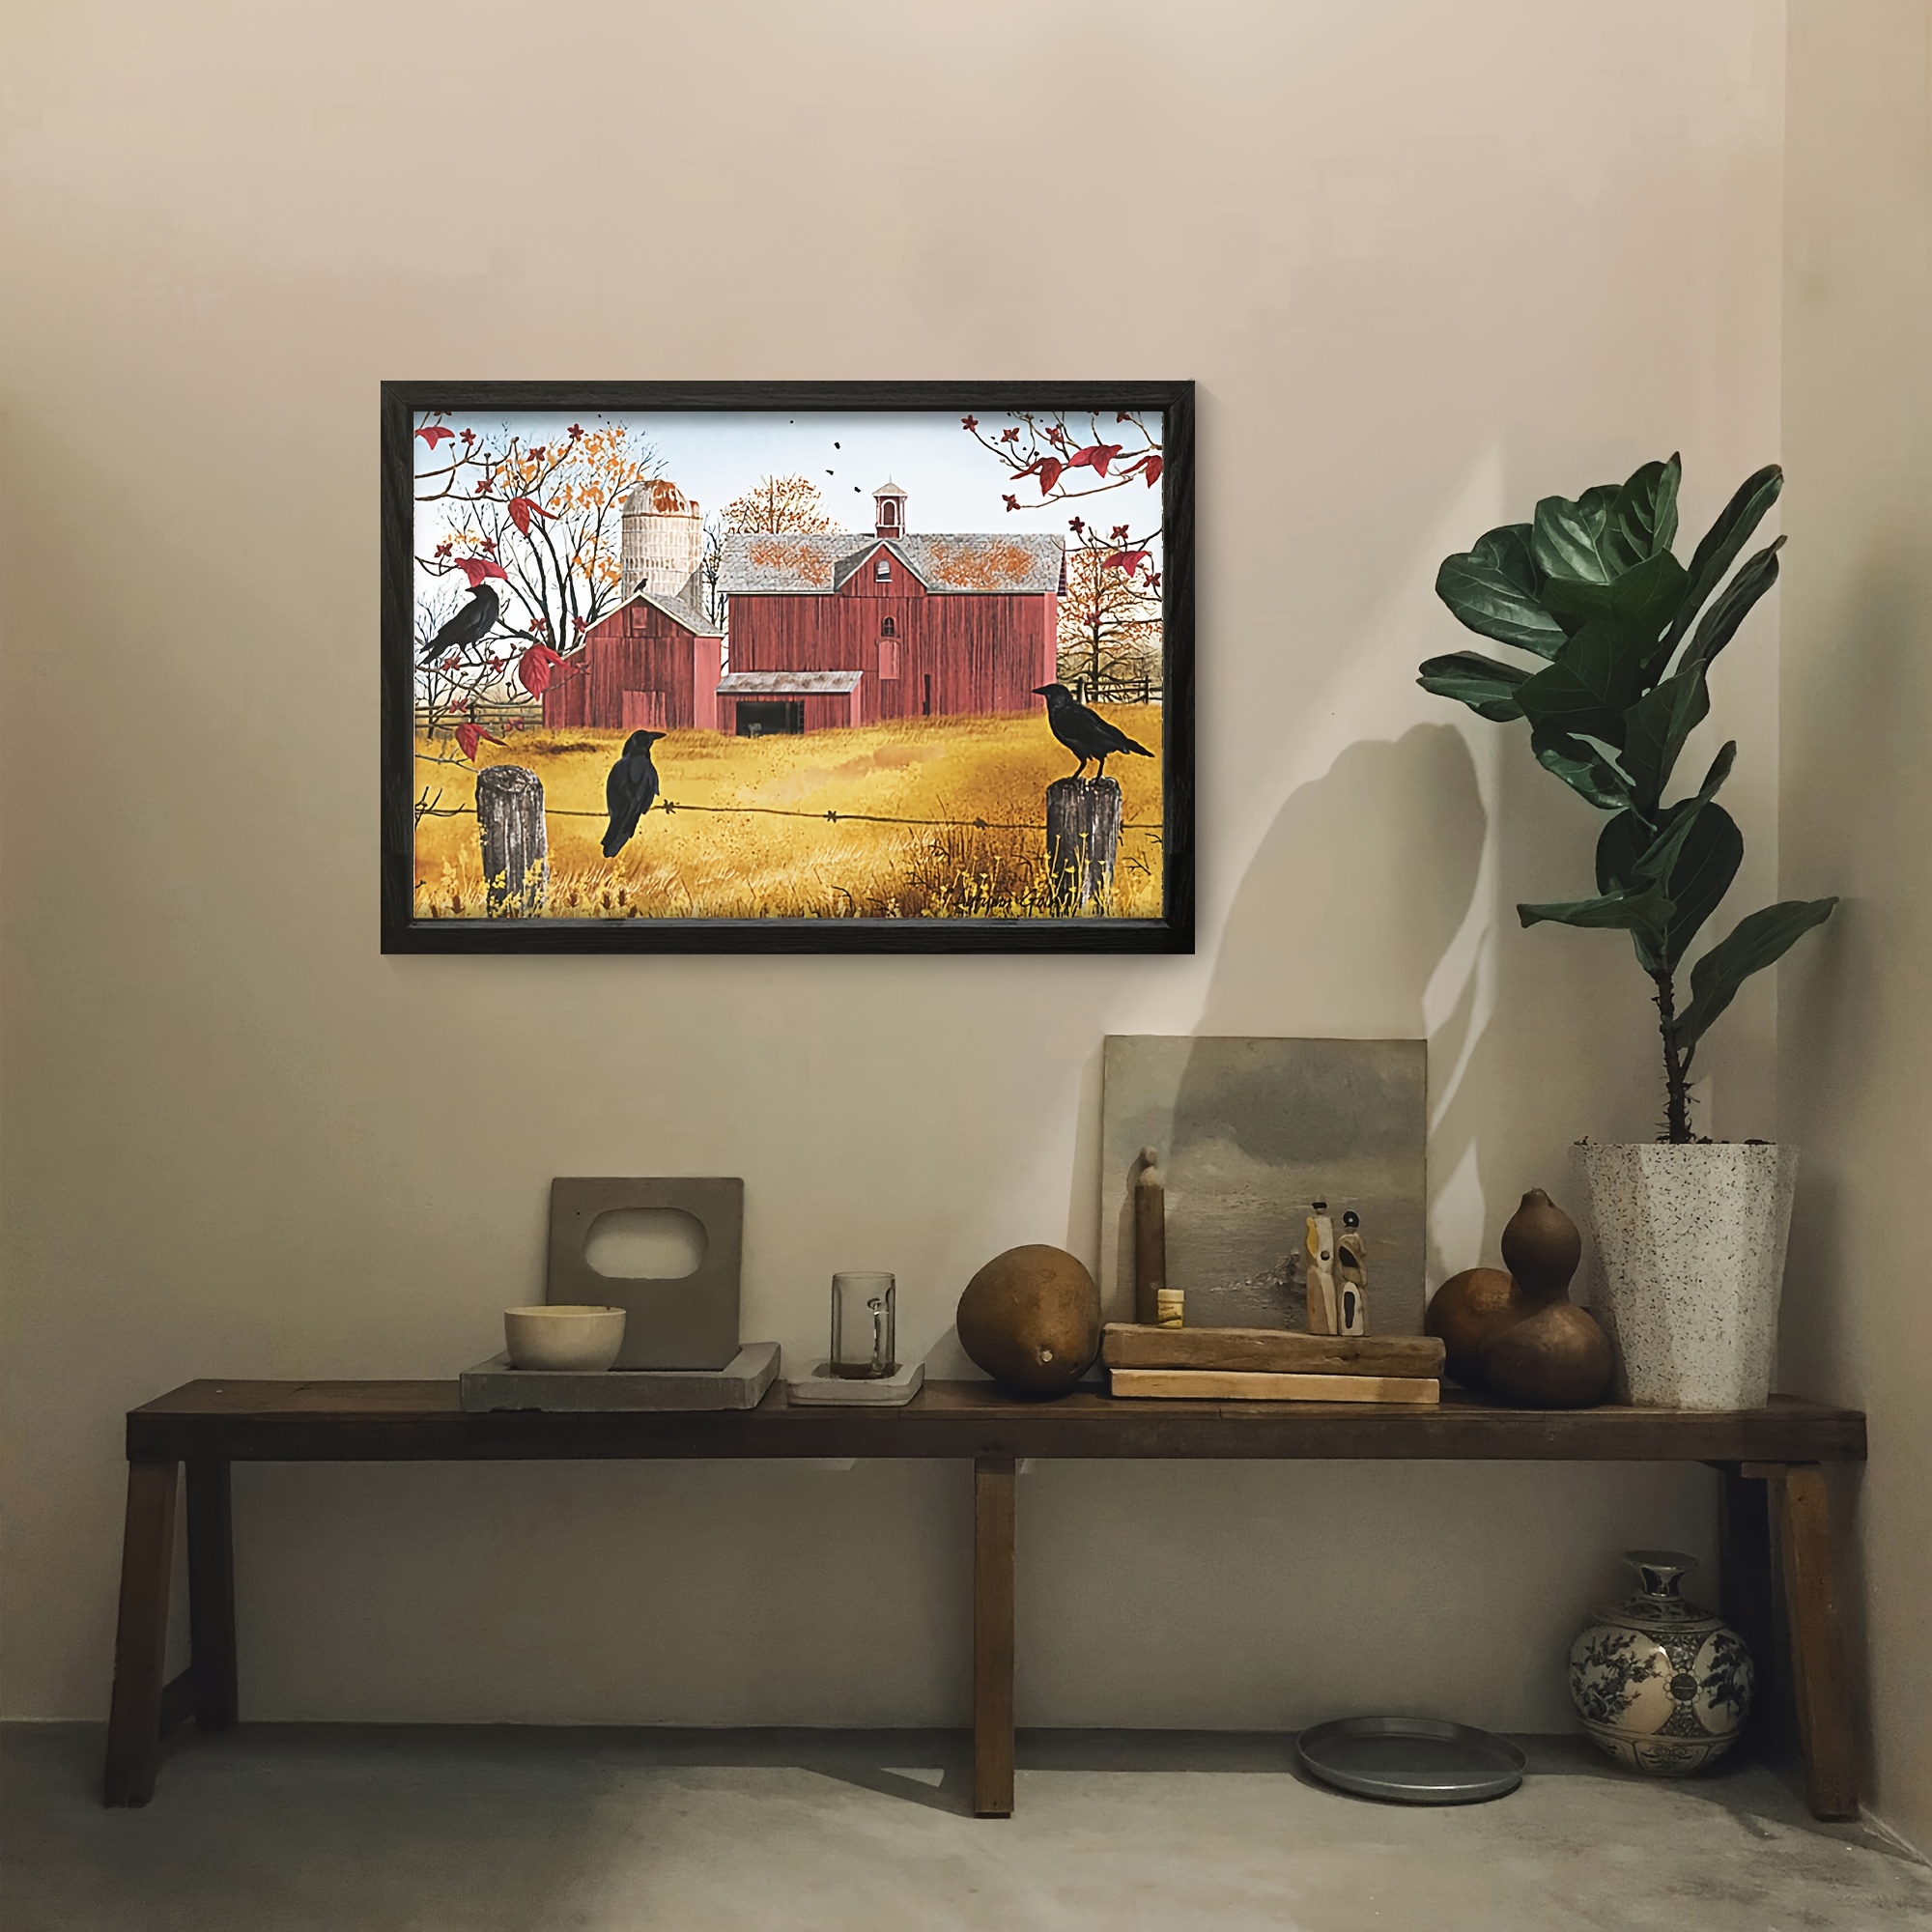 

1pc, Framed Billy Canvas Wall Art, Country Barn Farm Primitive Folk Art Print For Bedroom Living Room Decor, Wood Frame